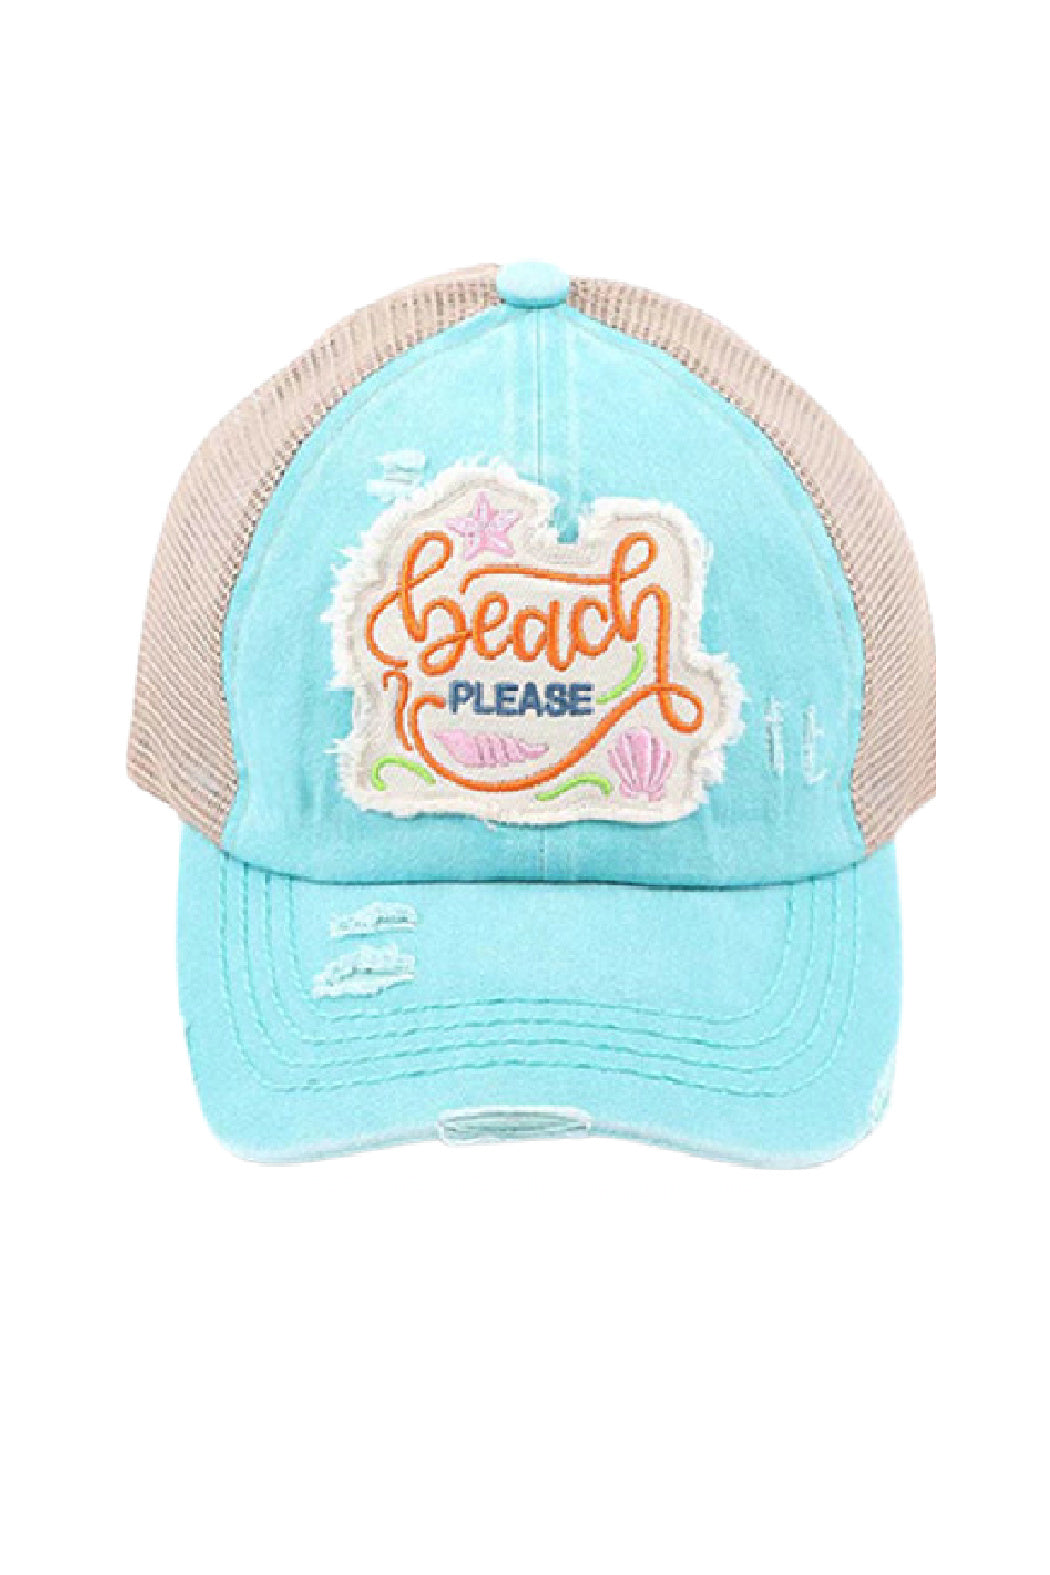 Beach Please Distressed Cap